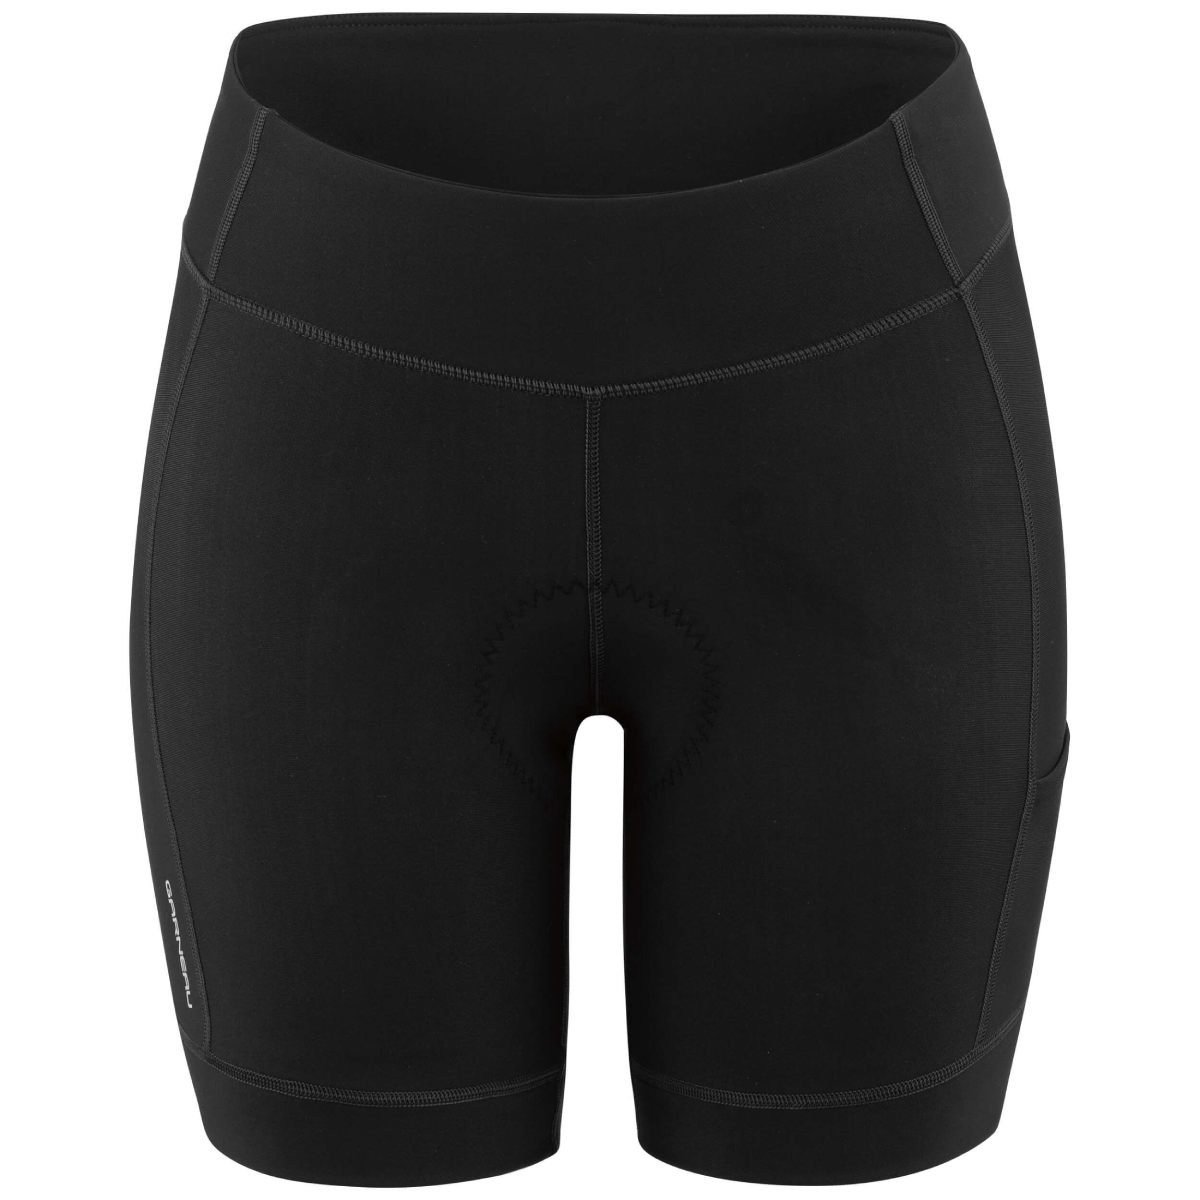 Garneau Fit Sensor 7.5 2.0 Women's Shorts Black 2XLarge